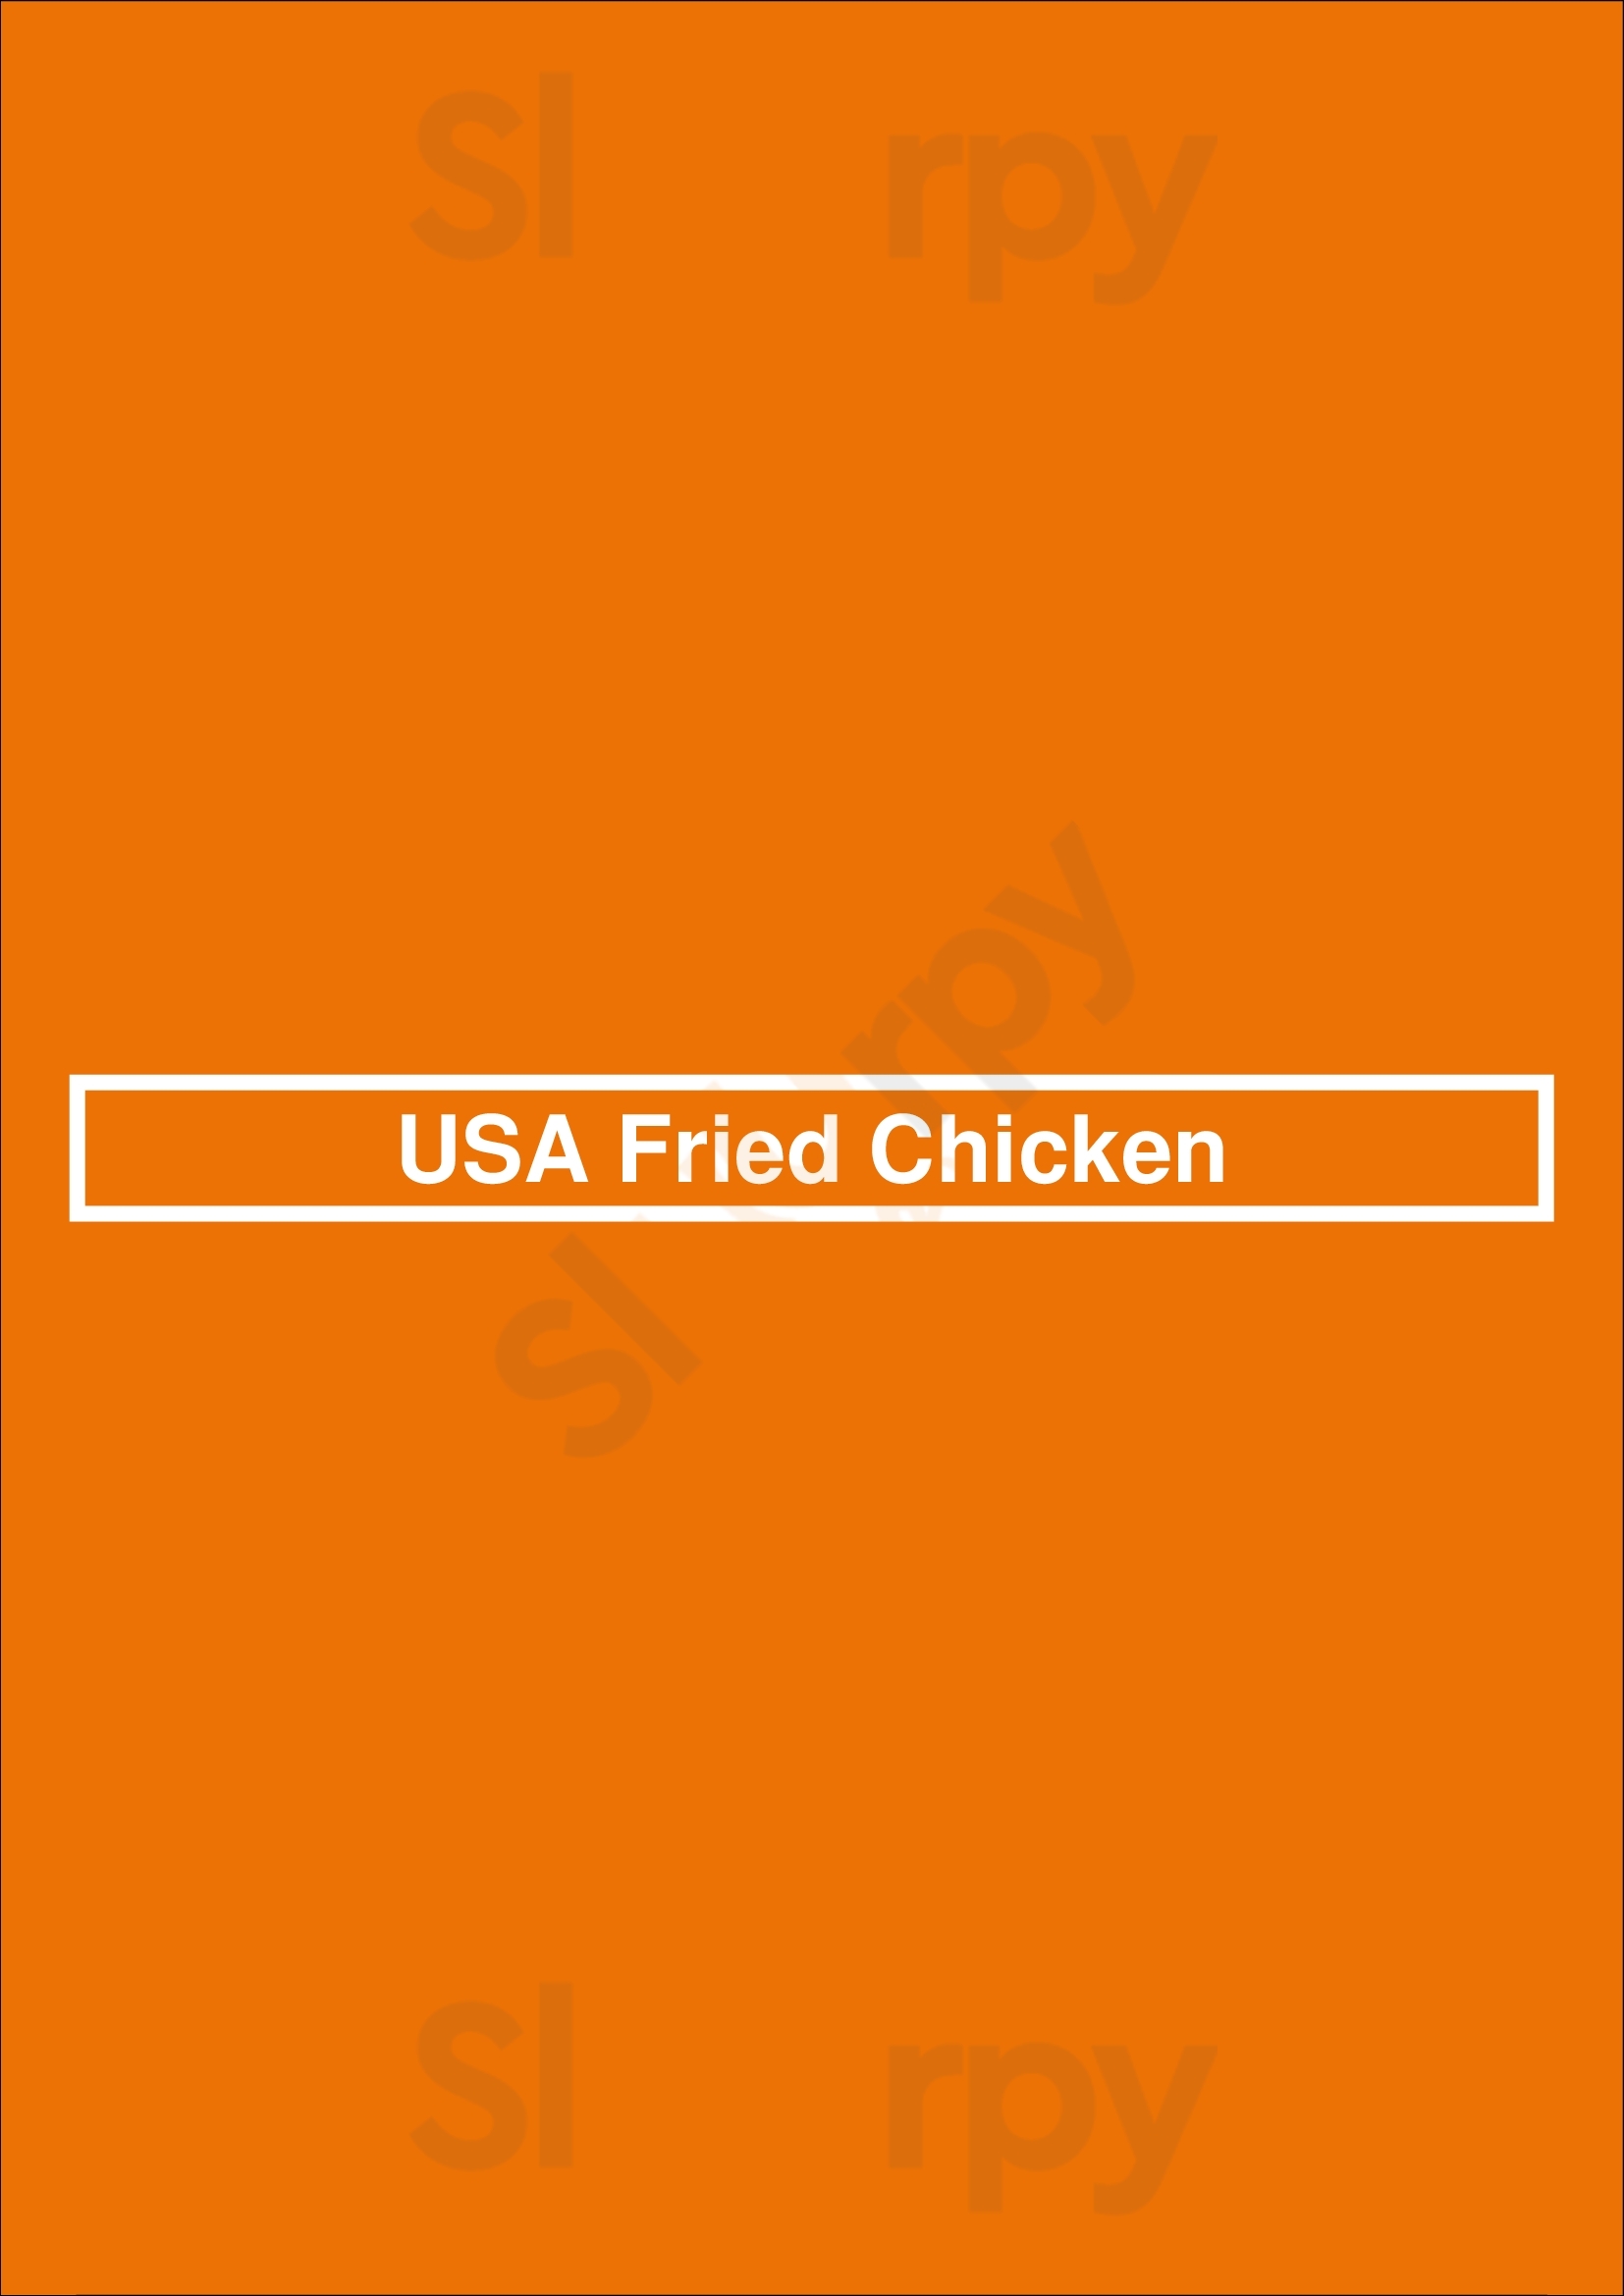 Usa Fried Chicken Bexhill-on-Sea Menu - 1